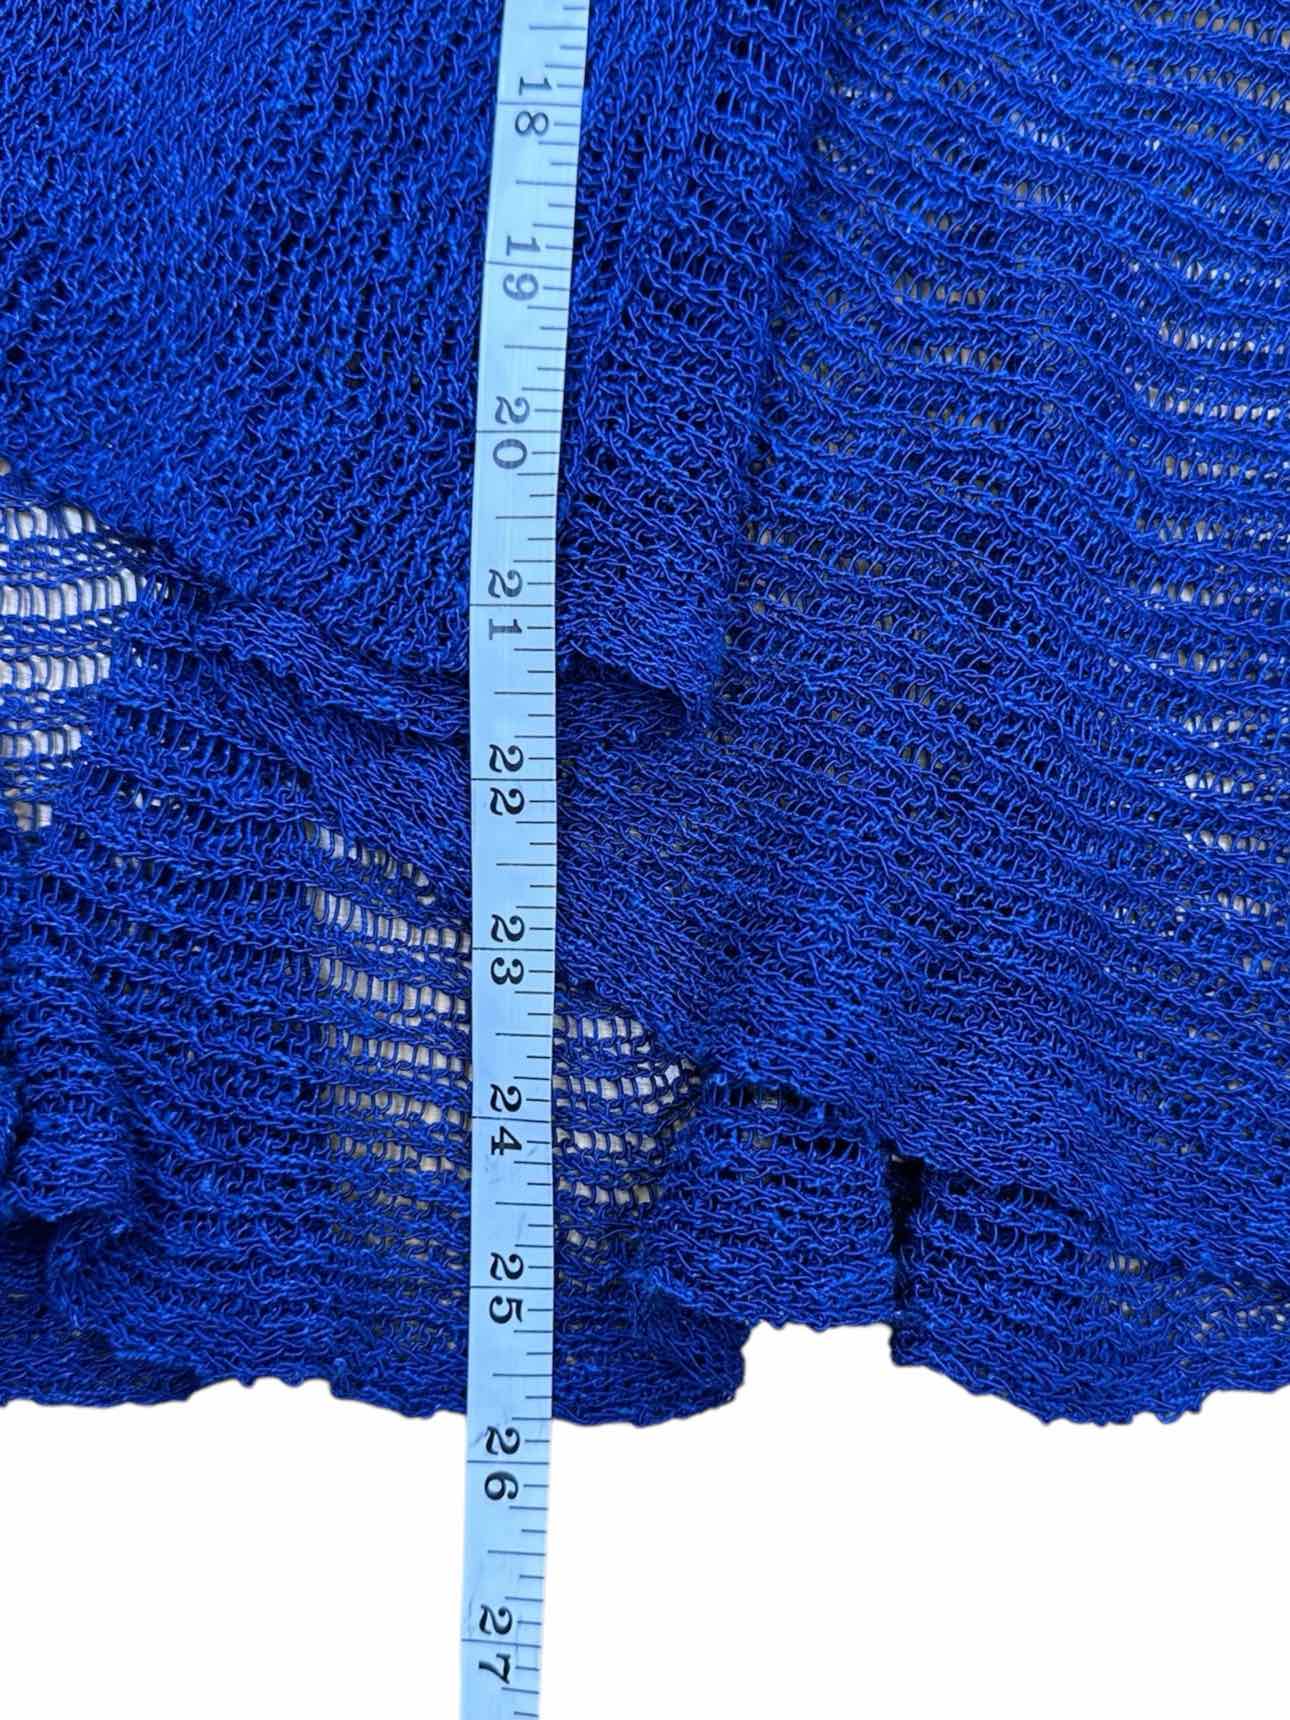 EILEEN FISHER Blue Linen Cardigan Size XS